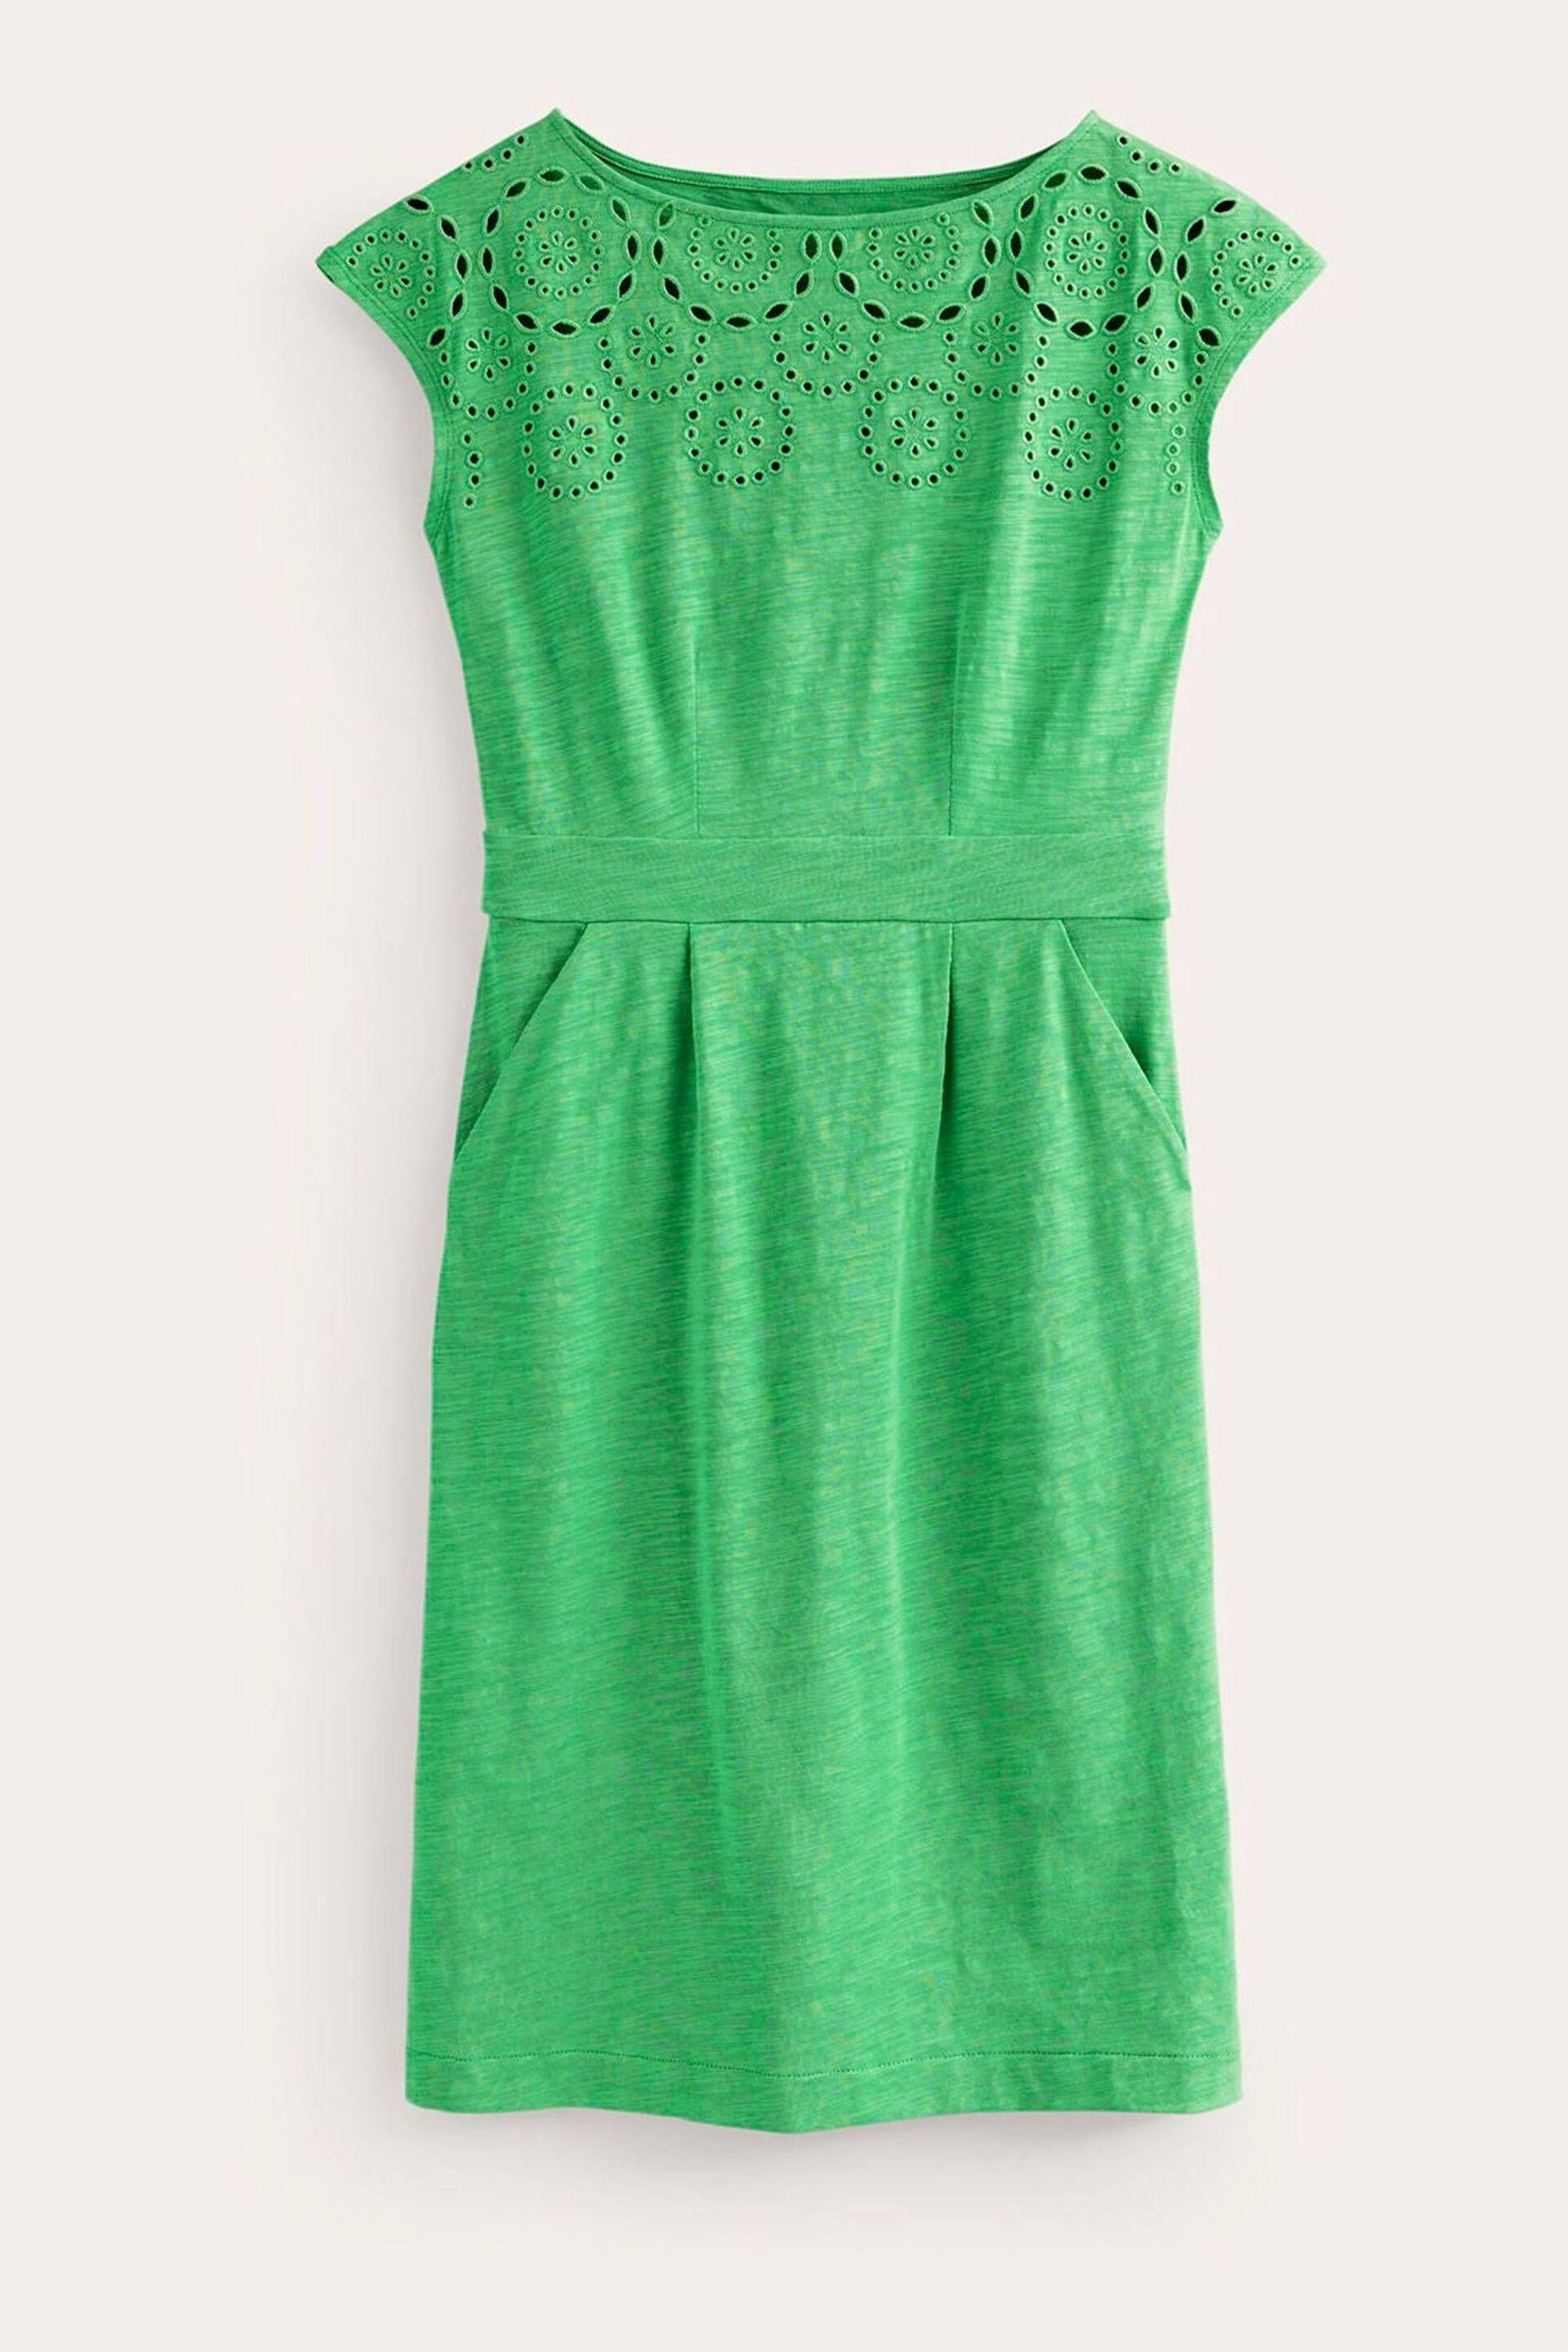 Boden Green Petite Florrie Broderie Jersey Dress - Image 5 of 5